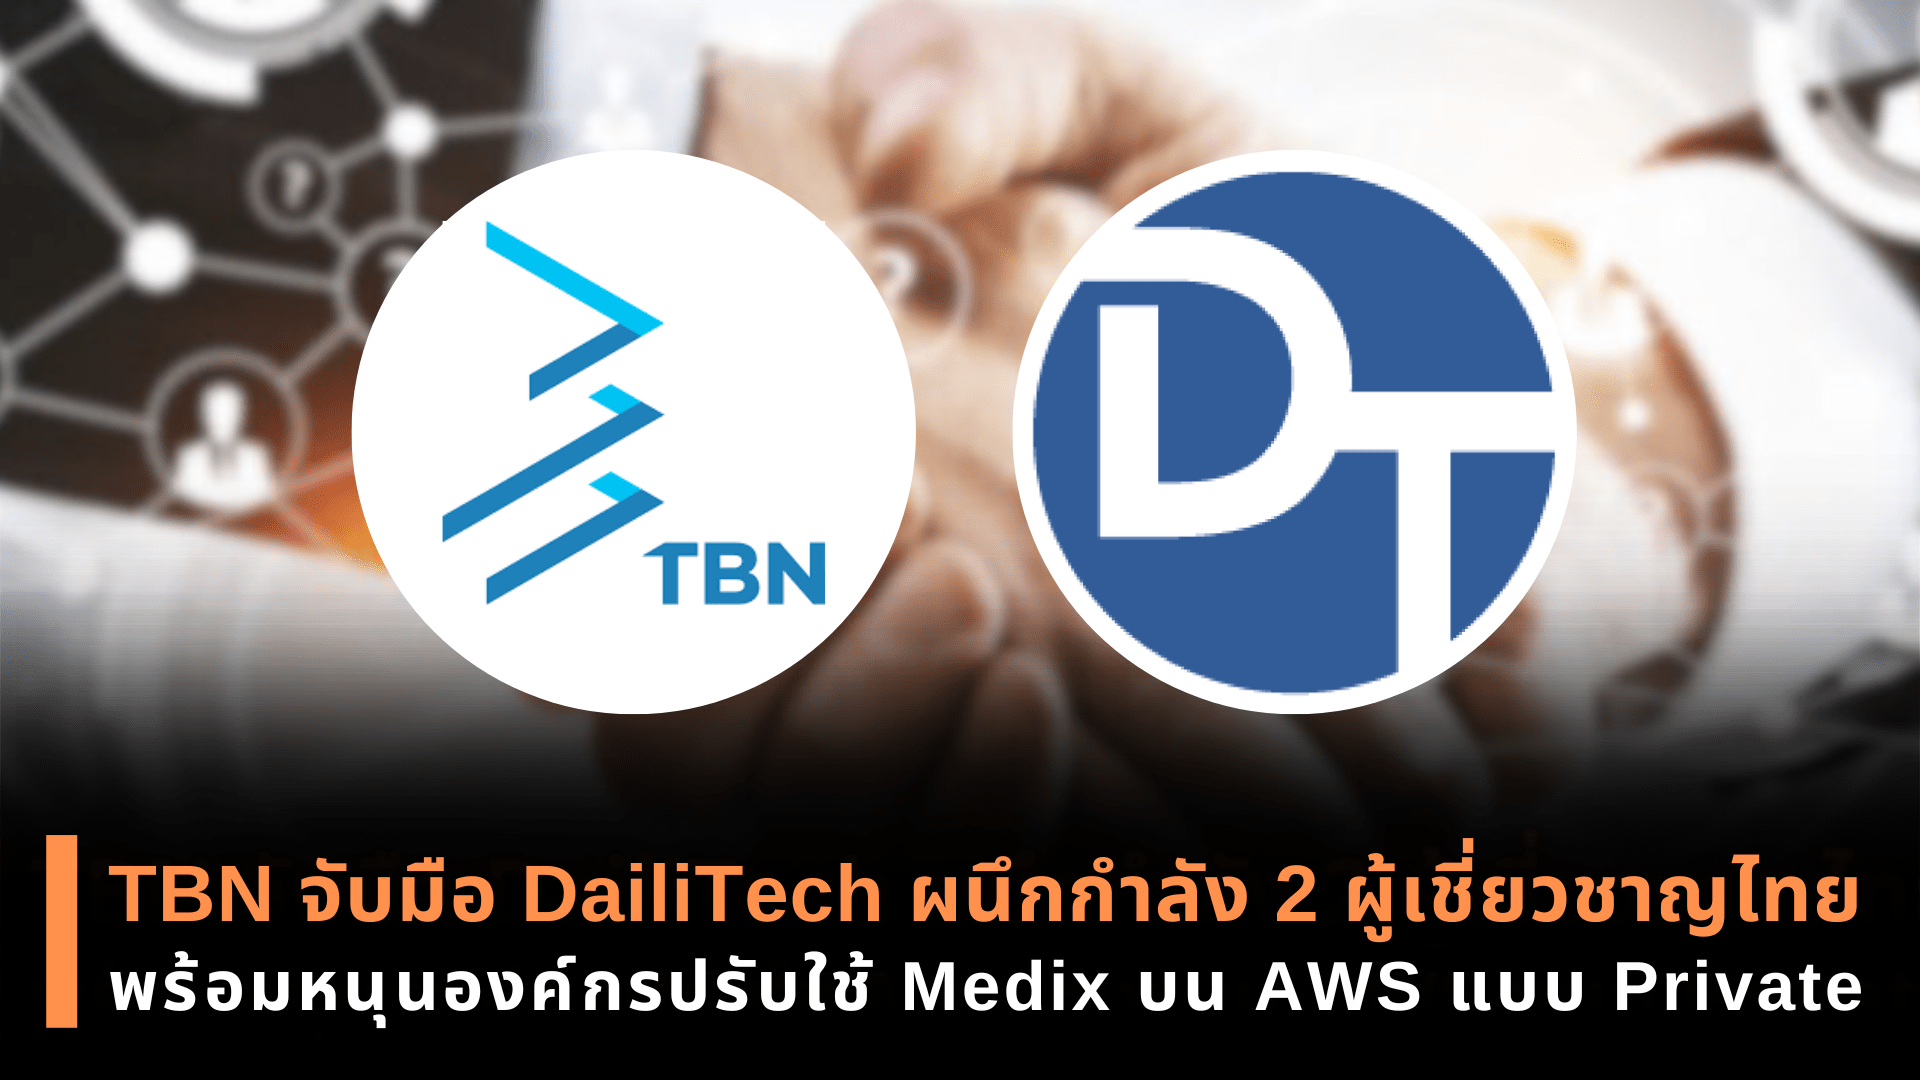 TBN จับมือ DailiTech ผนึกกำลัง 2 ผู้เชี่ยวชาญไทย  พร้อมหนุนองค์กรปรับใช้ Mendix บน AWS แบบ Private